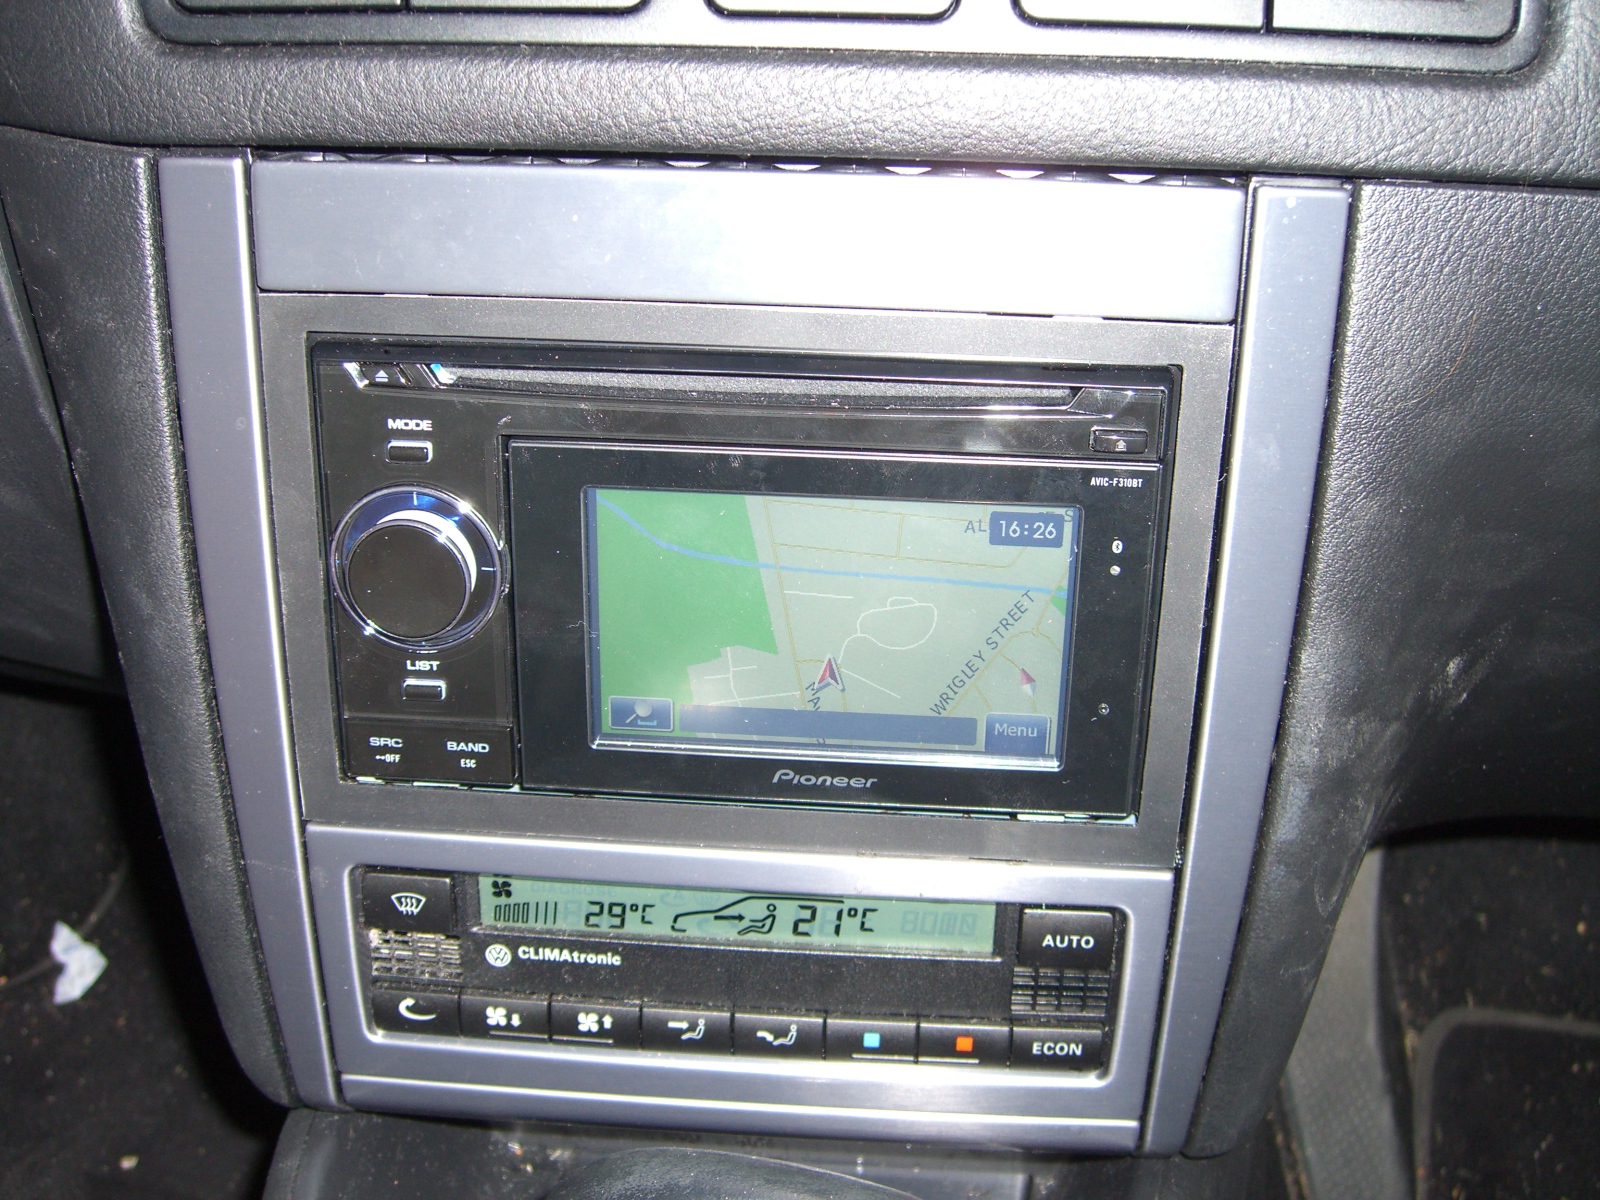 VW Golf mkV Gps navigation unit